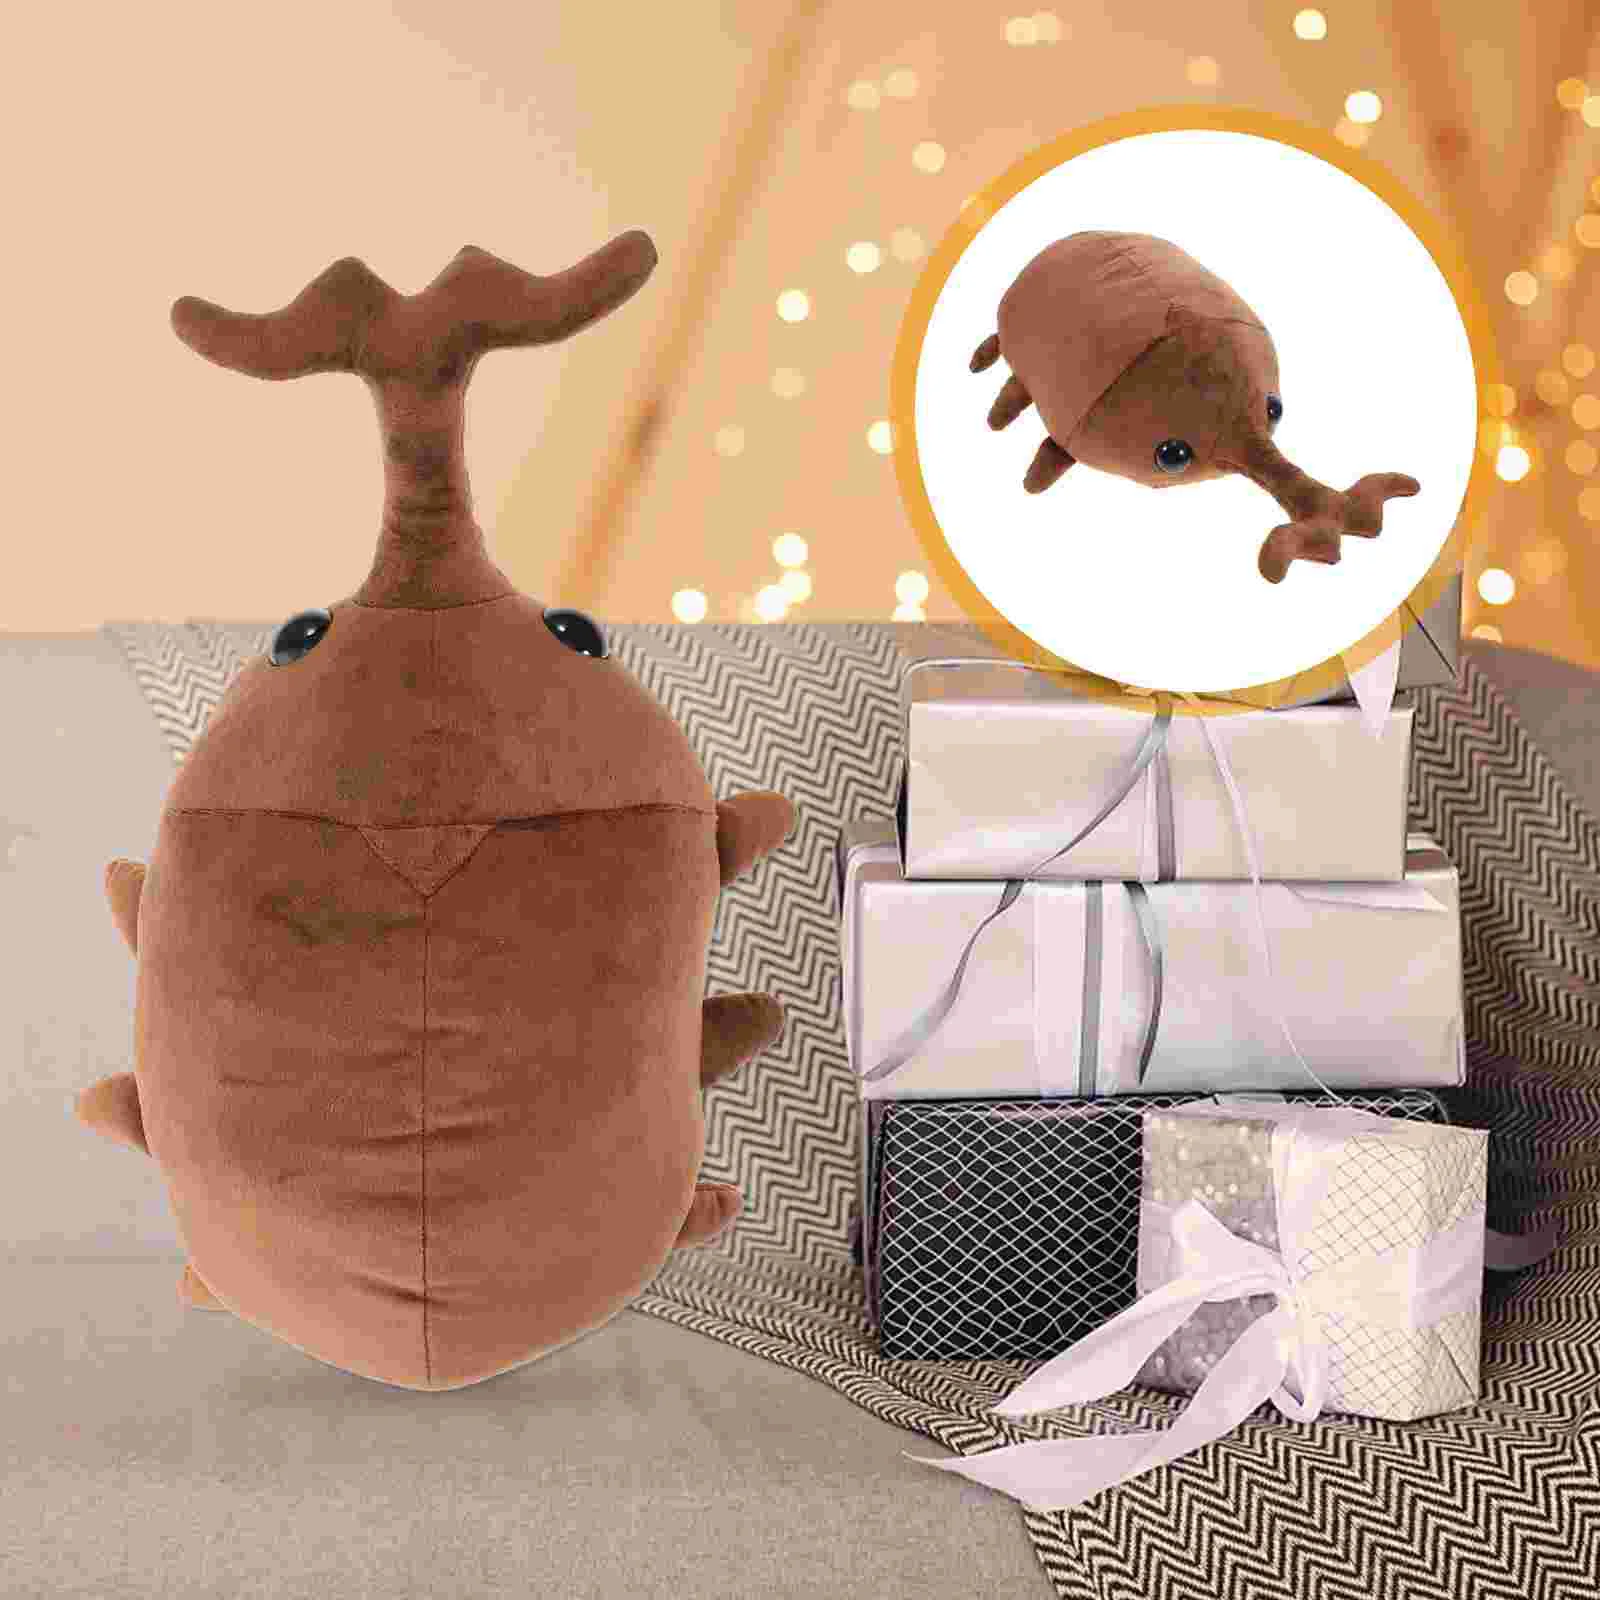 

Beetle Plush Cotton Stuffed Animal Cute Animals Filling Uang Pp Birthday Gift Girls Toy